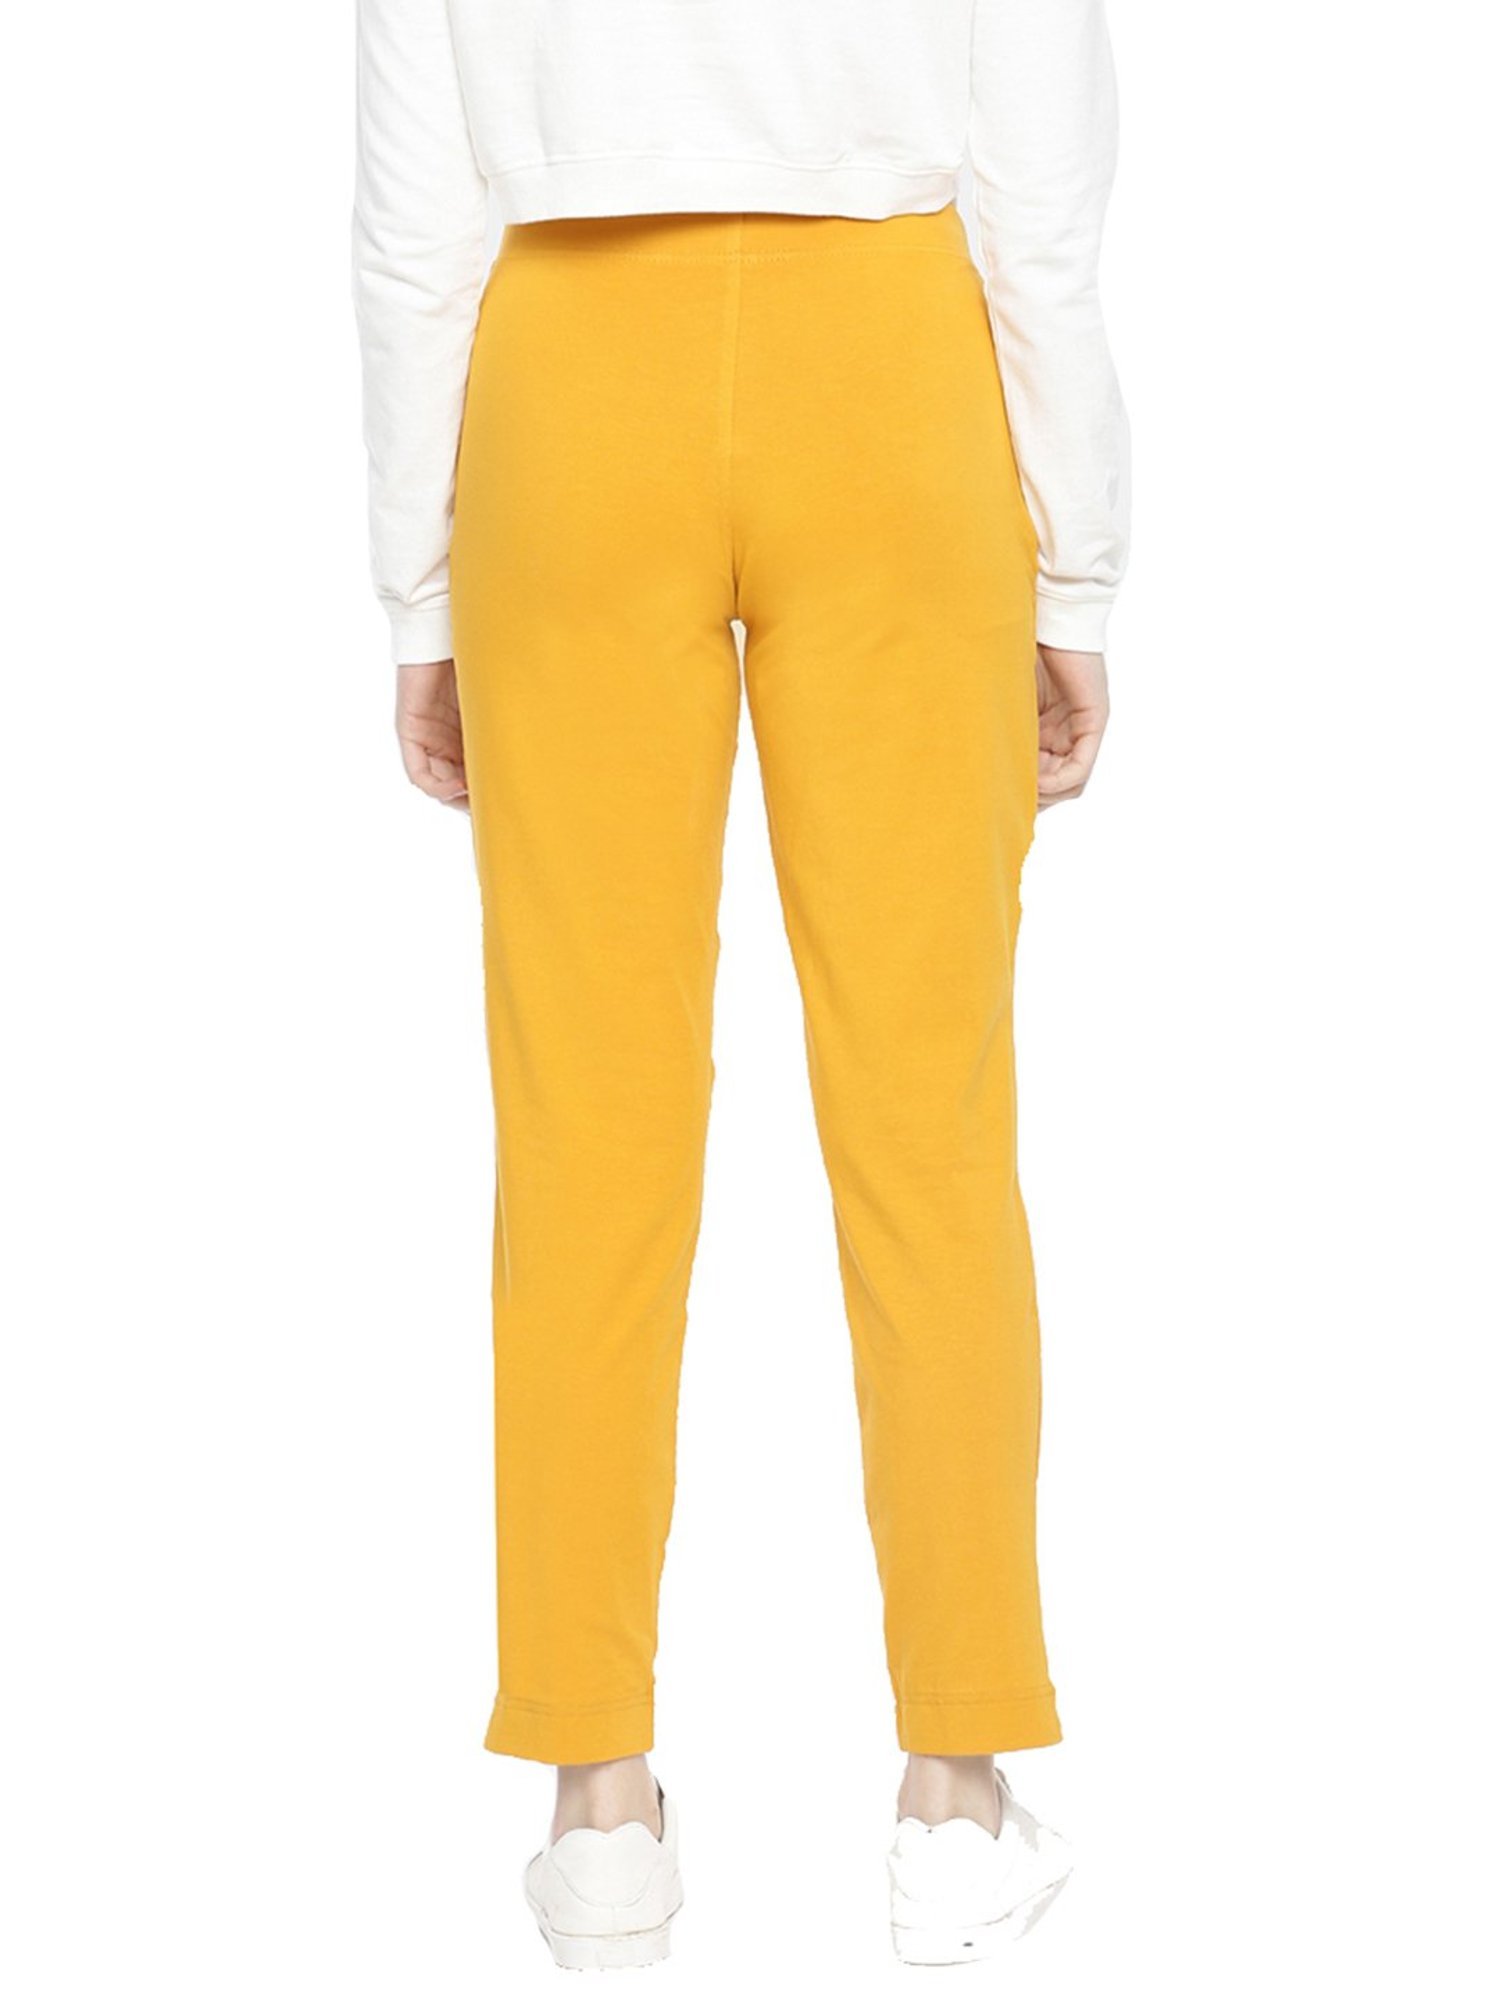 Menswear | Yellow pants outfit, Mustard pants, Pants outfit men